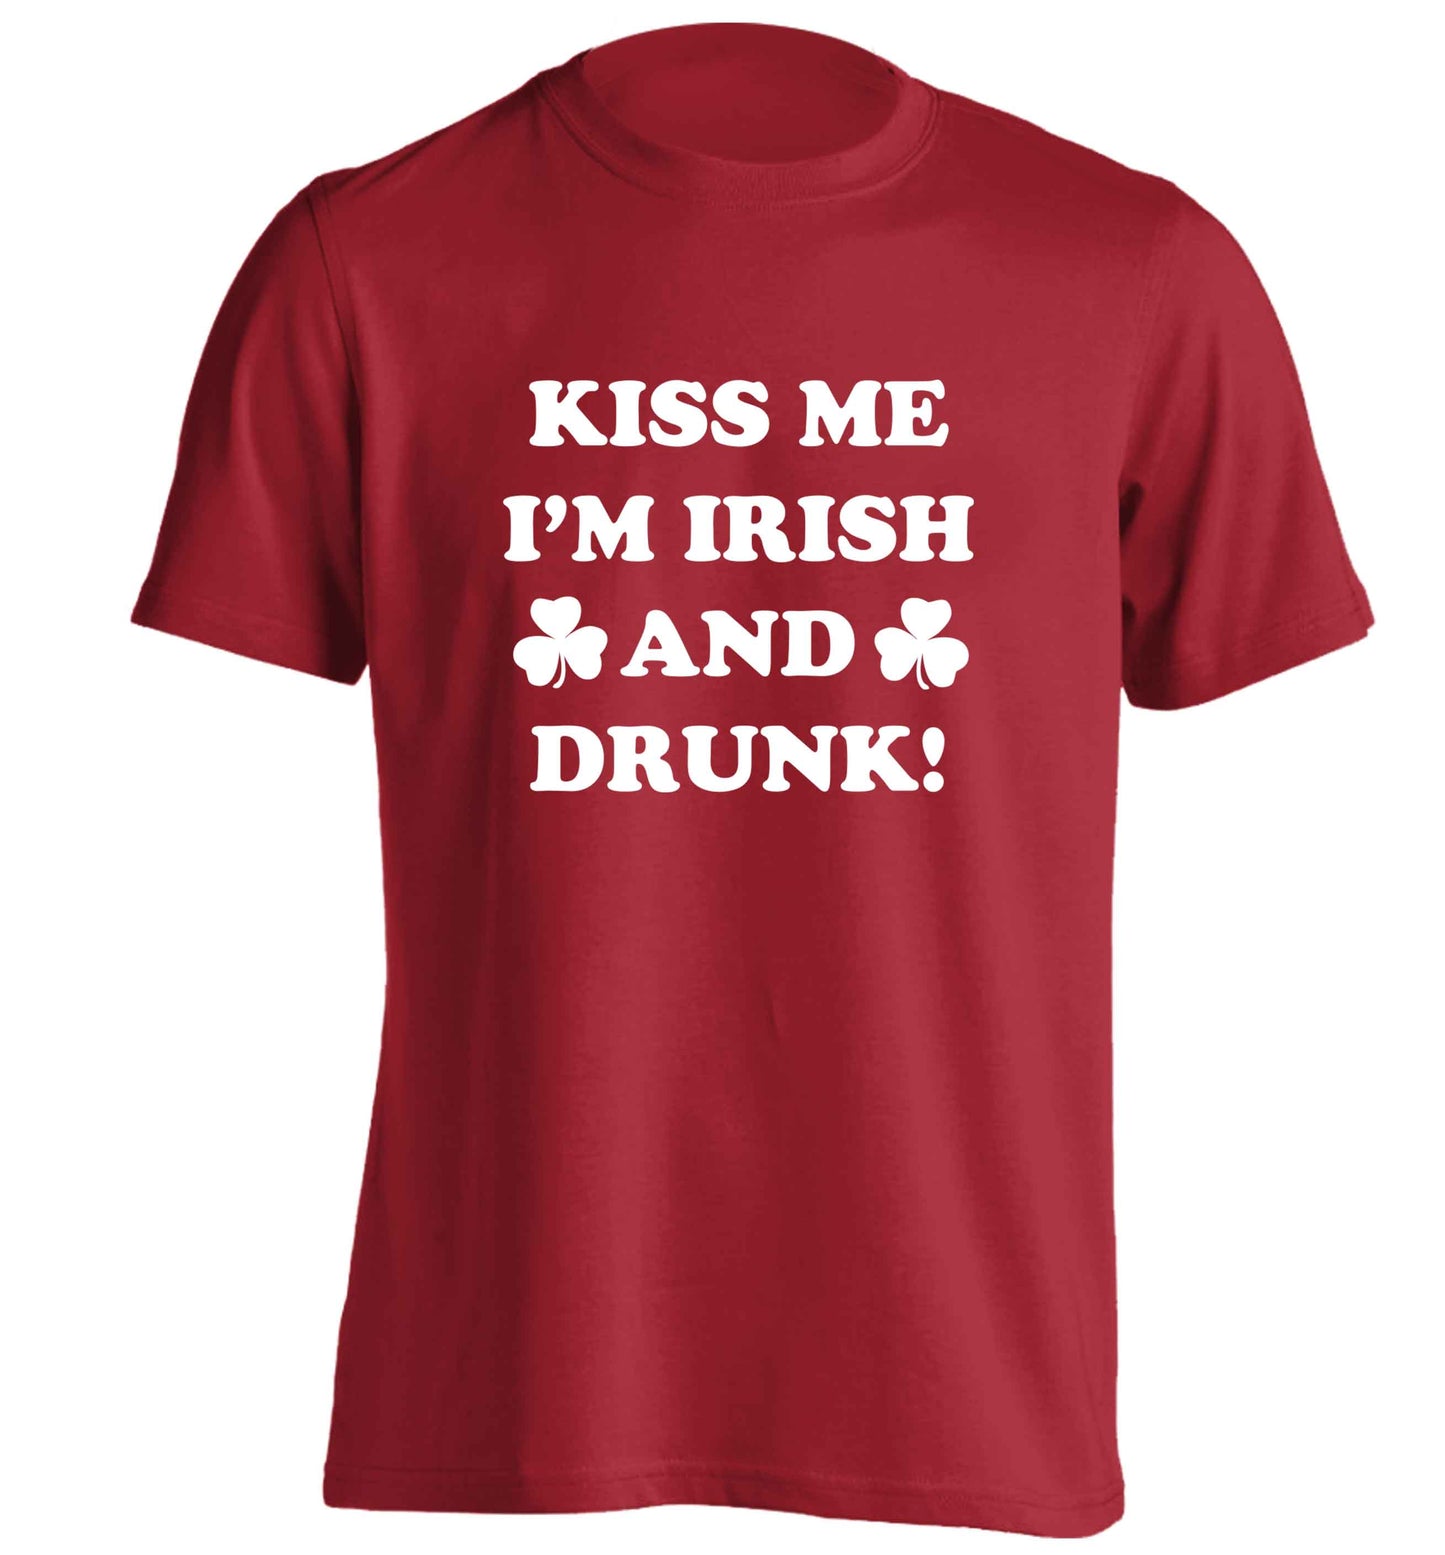 Kiss me I'm Irish and drunk adults unisex red Tshirt 2XL